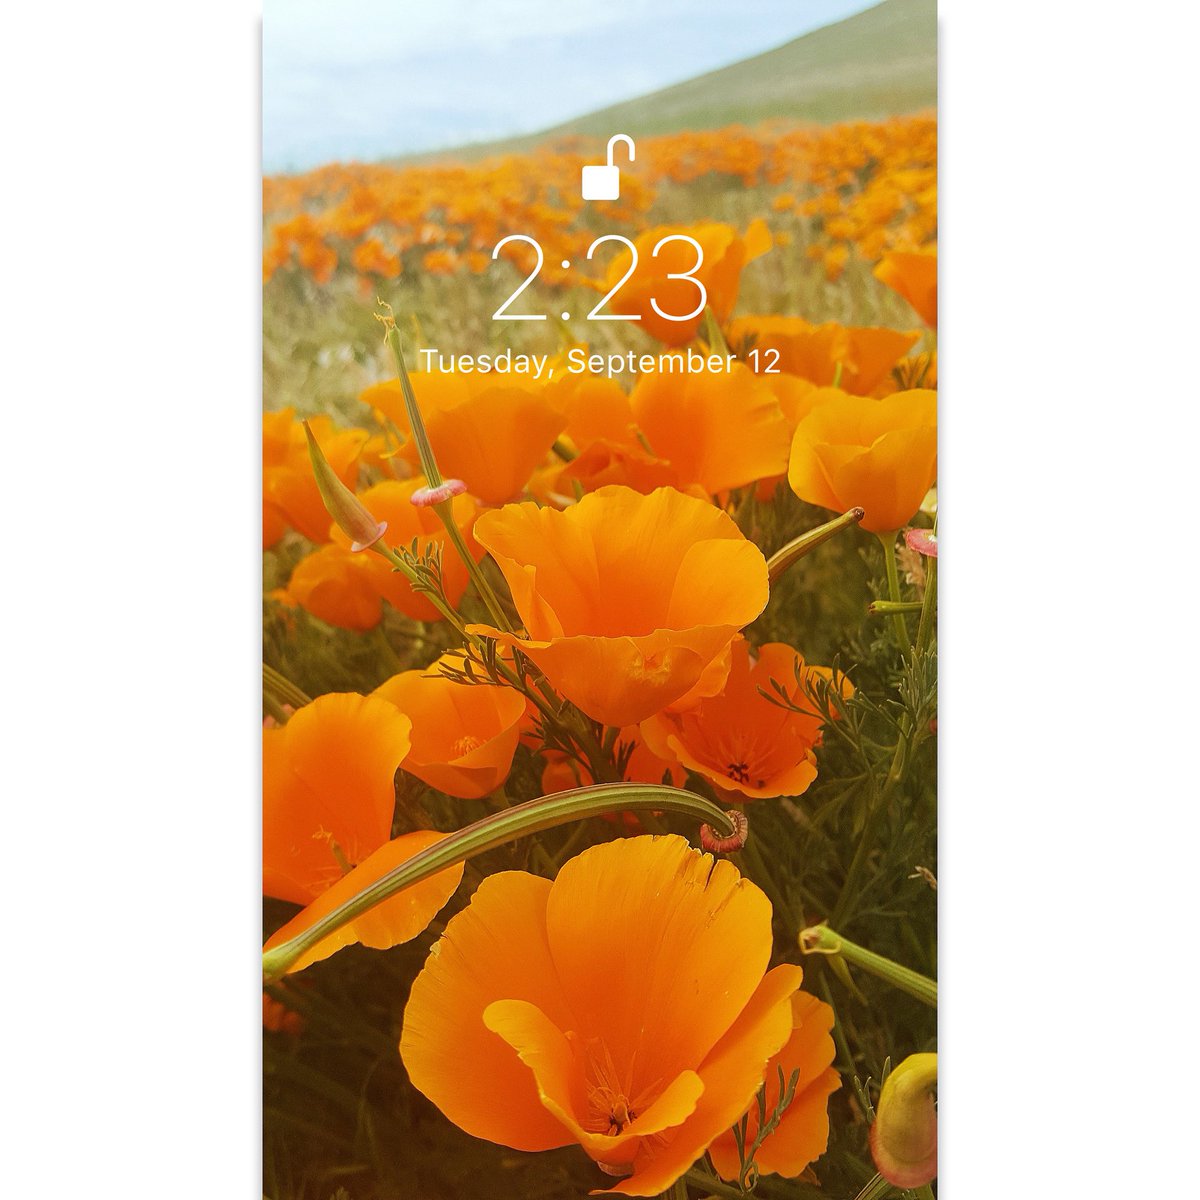 Keep calm and download new wallpapers💫

#wallpaper #screensaver #background #sfondi #papeisdeparede #papeisdeparedetumblr #wallpaperhd #wallpaperiphone #vibe #flowers #orangeflowers #field #nature #flowersfield